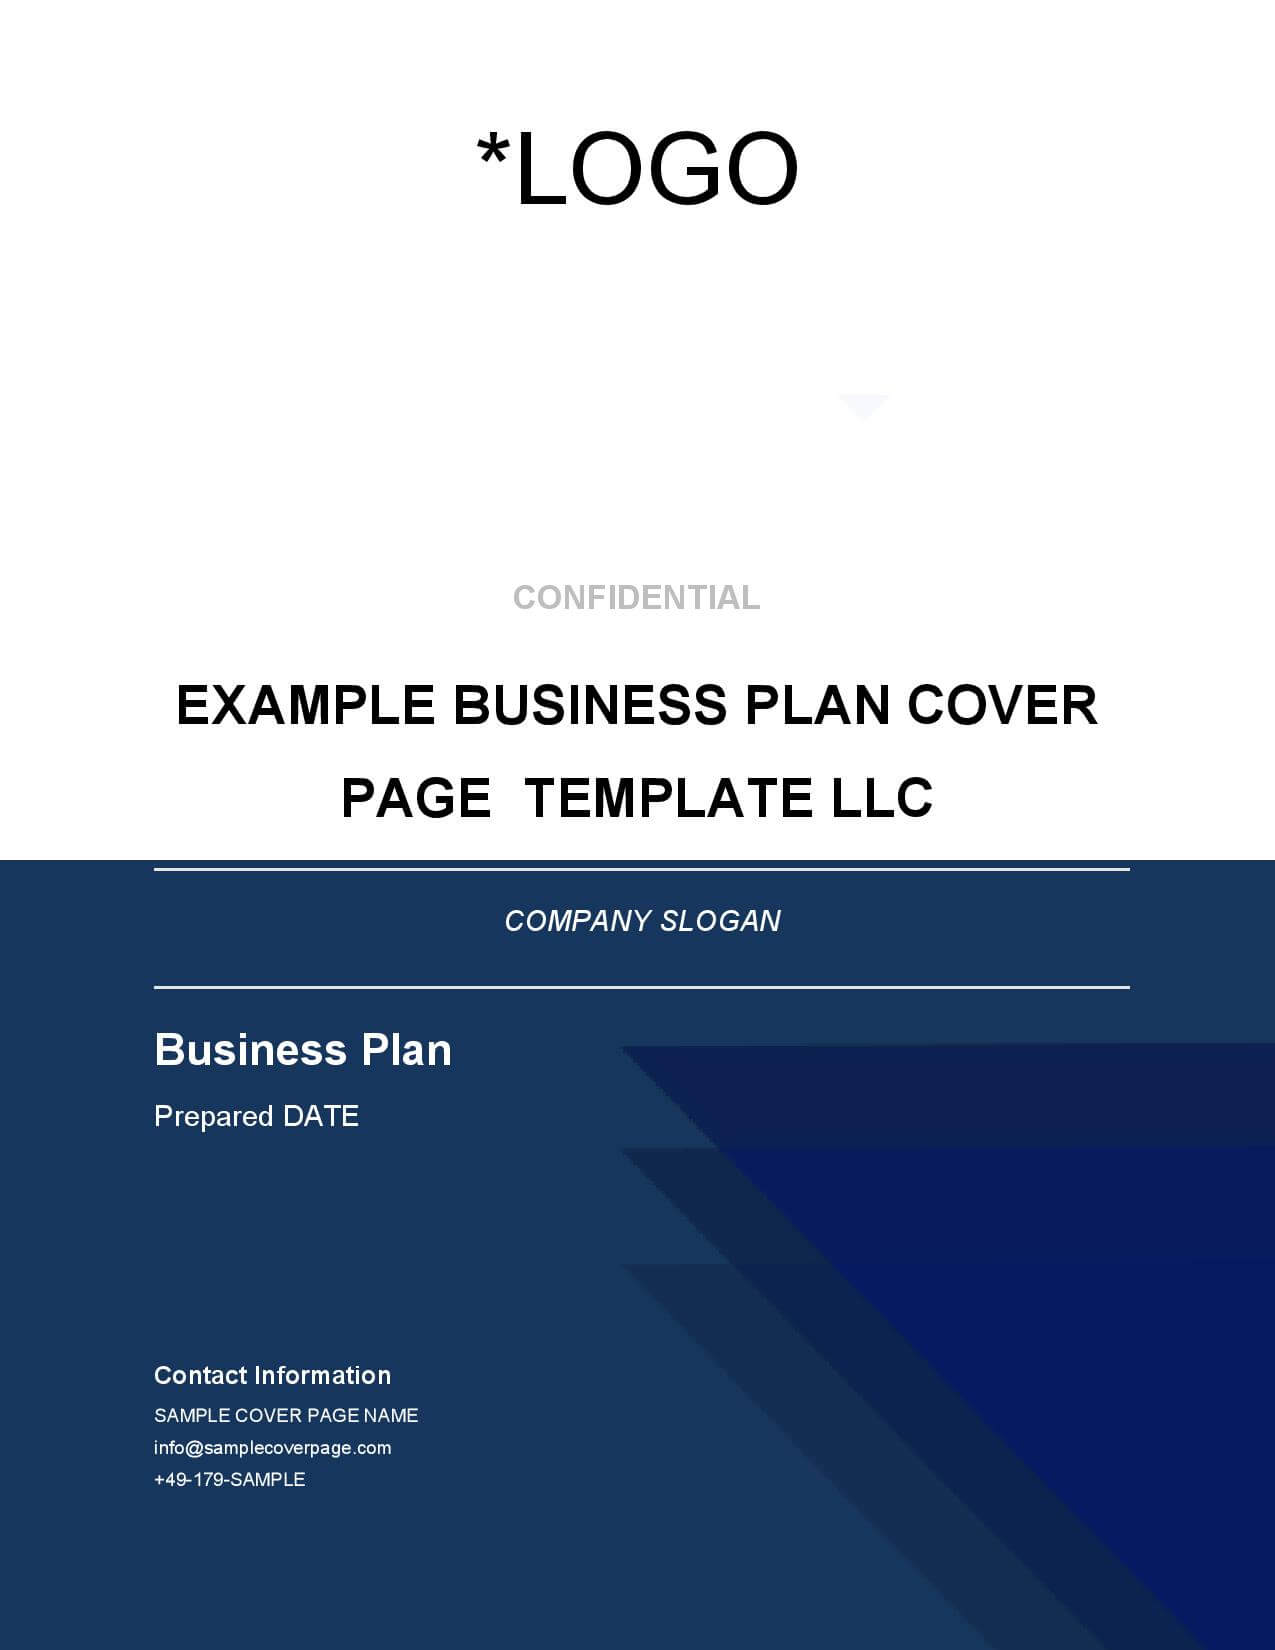 Writing A Business Plan Template